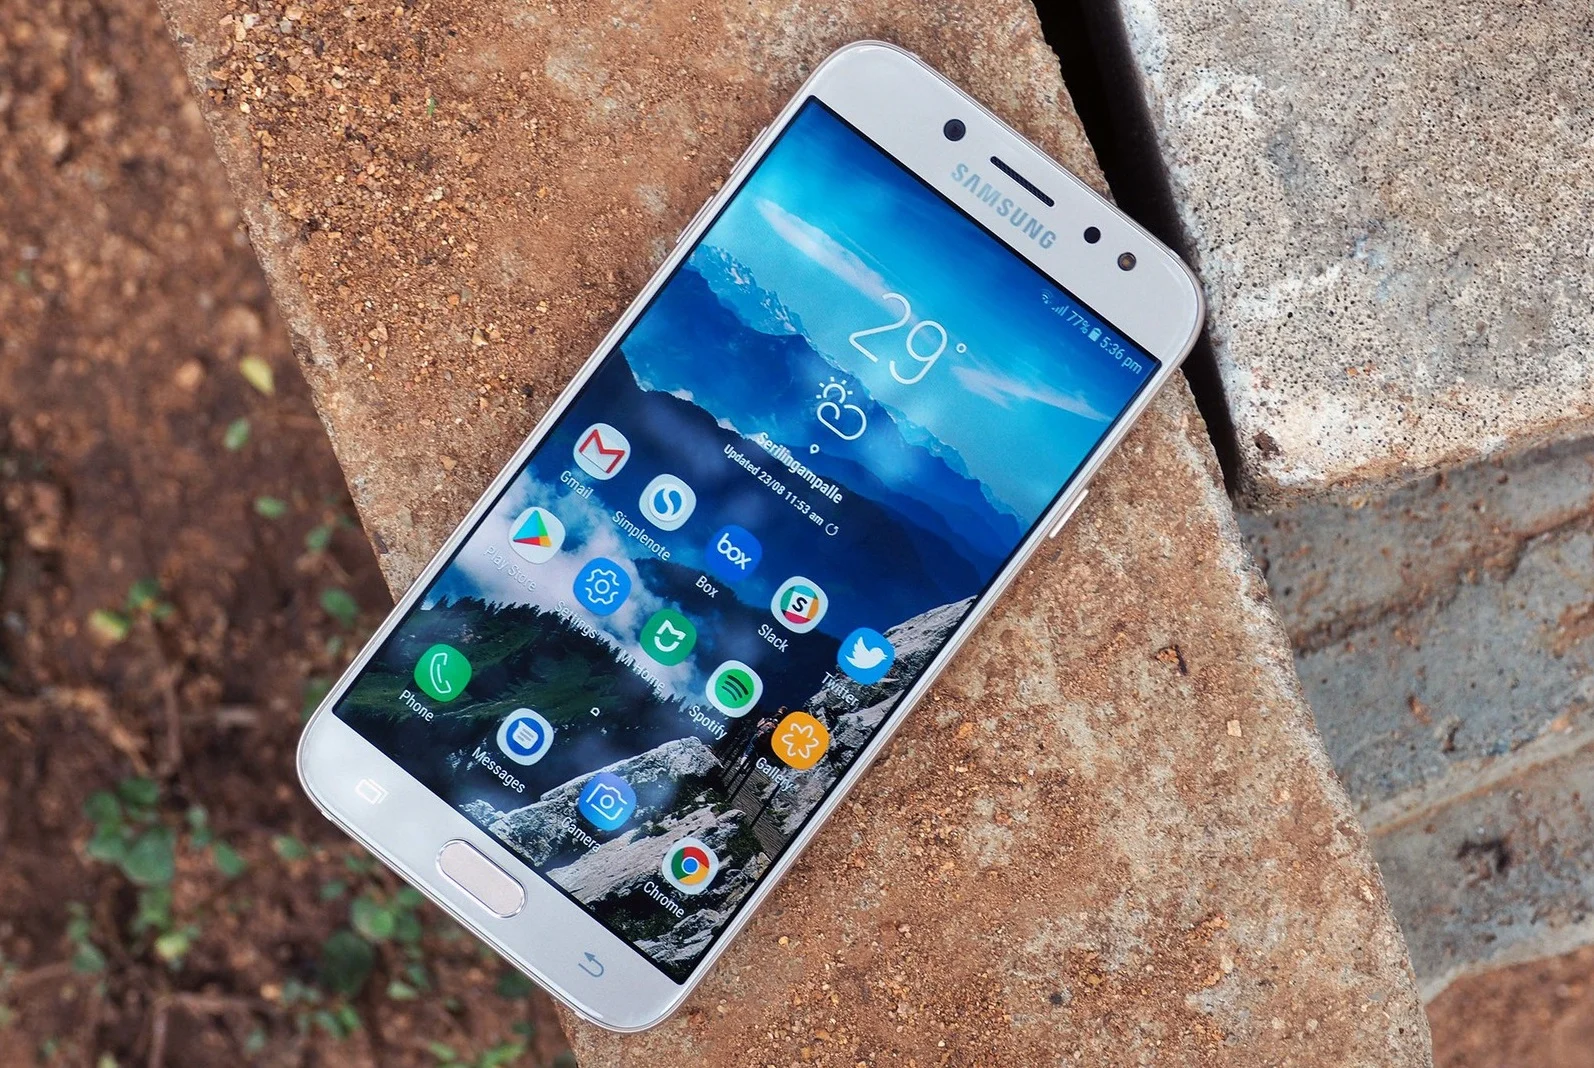 Samsung Galaxy J7 Pro получил обновление до Android 9 Pie - фото 1